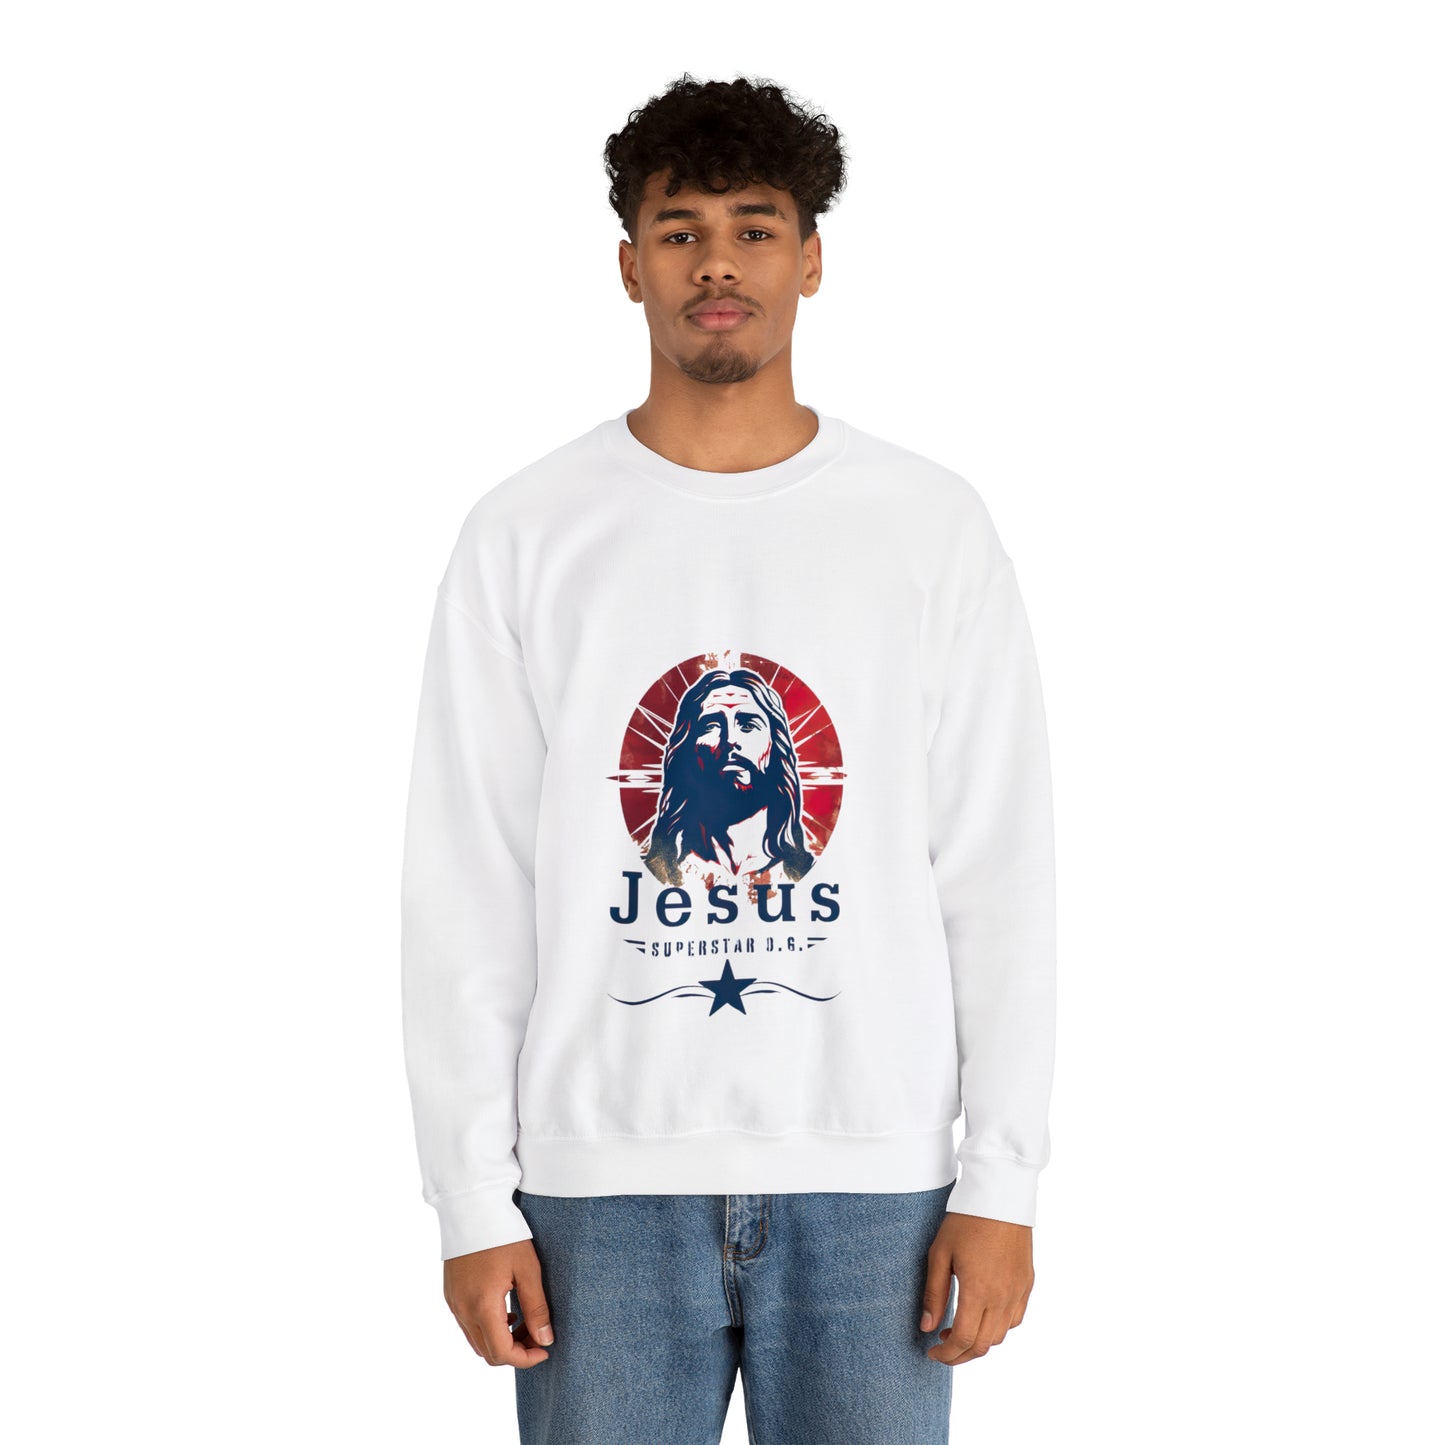 Jesus The Superstat O.G -  Crewneck Sweatshirt - Women